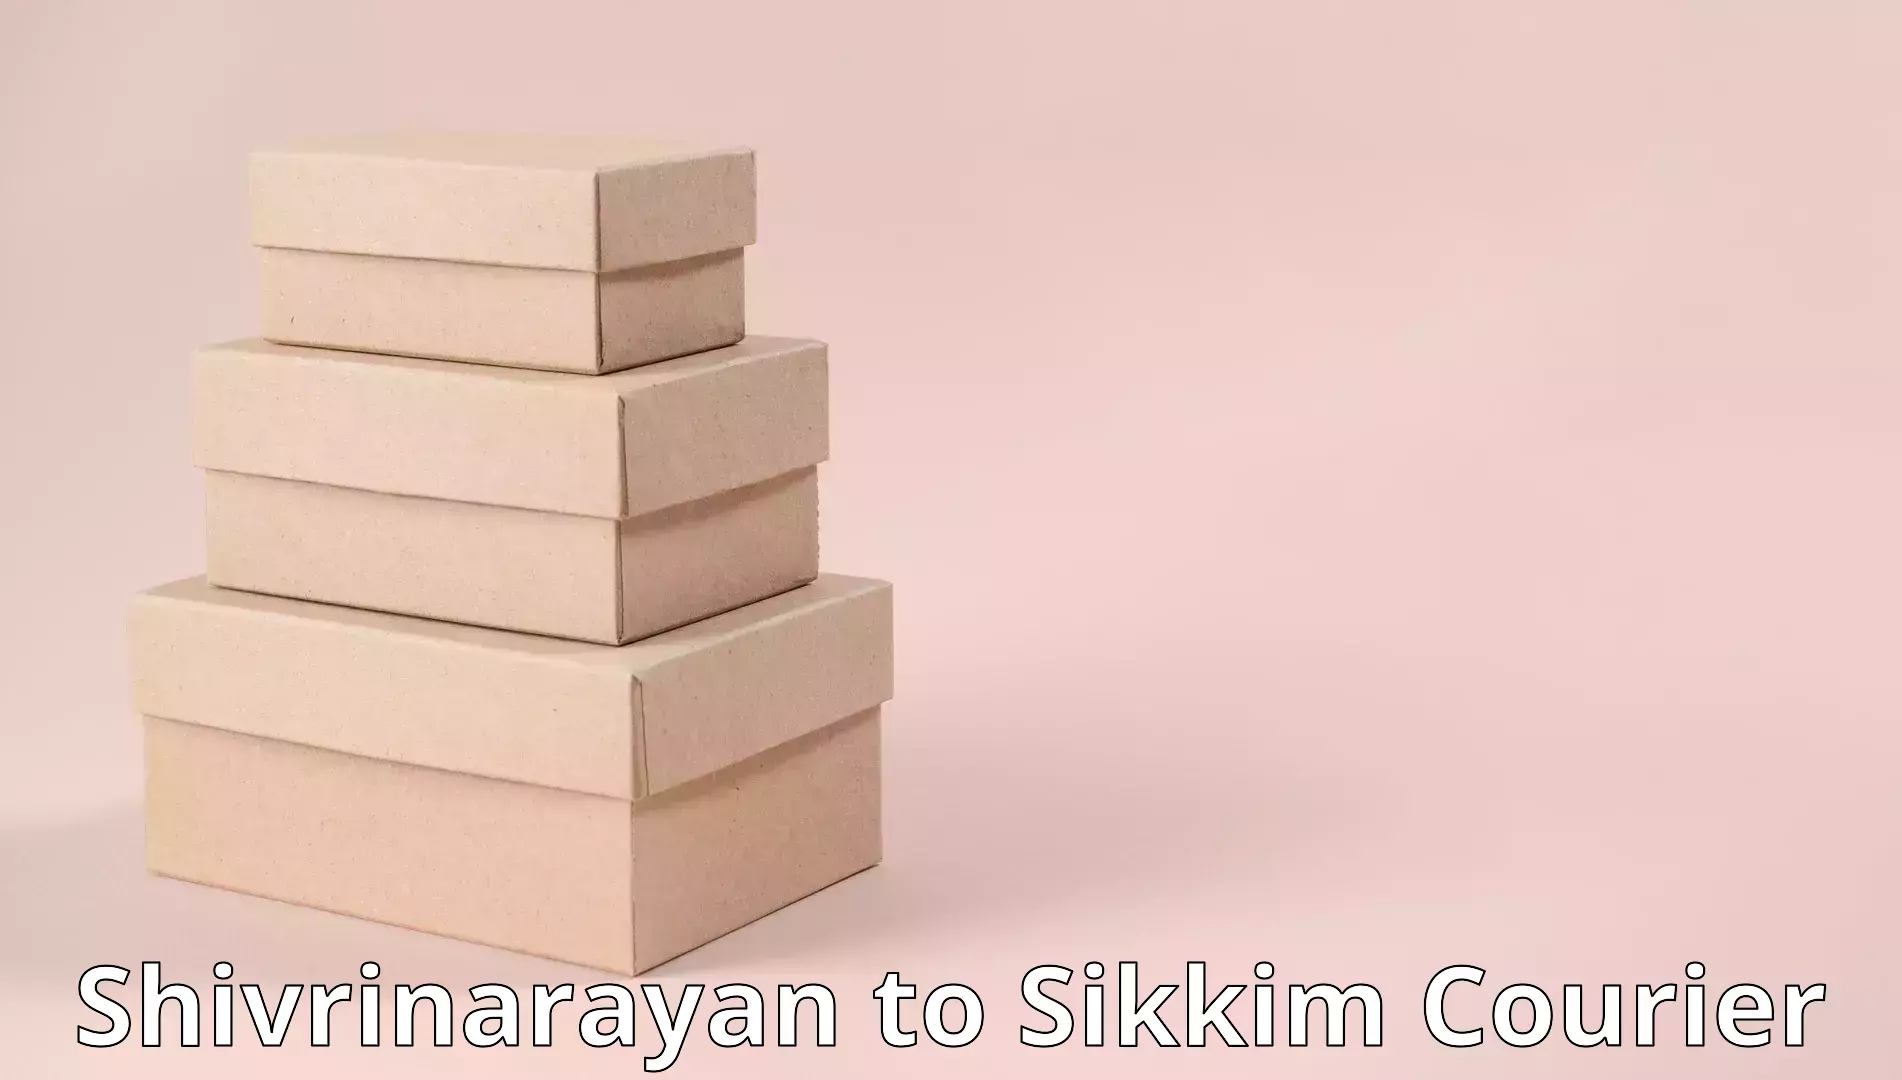 Quality moving company Shivrinarayan to Pelling